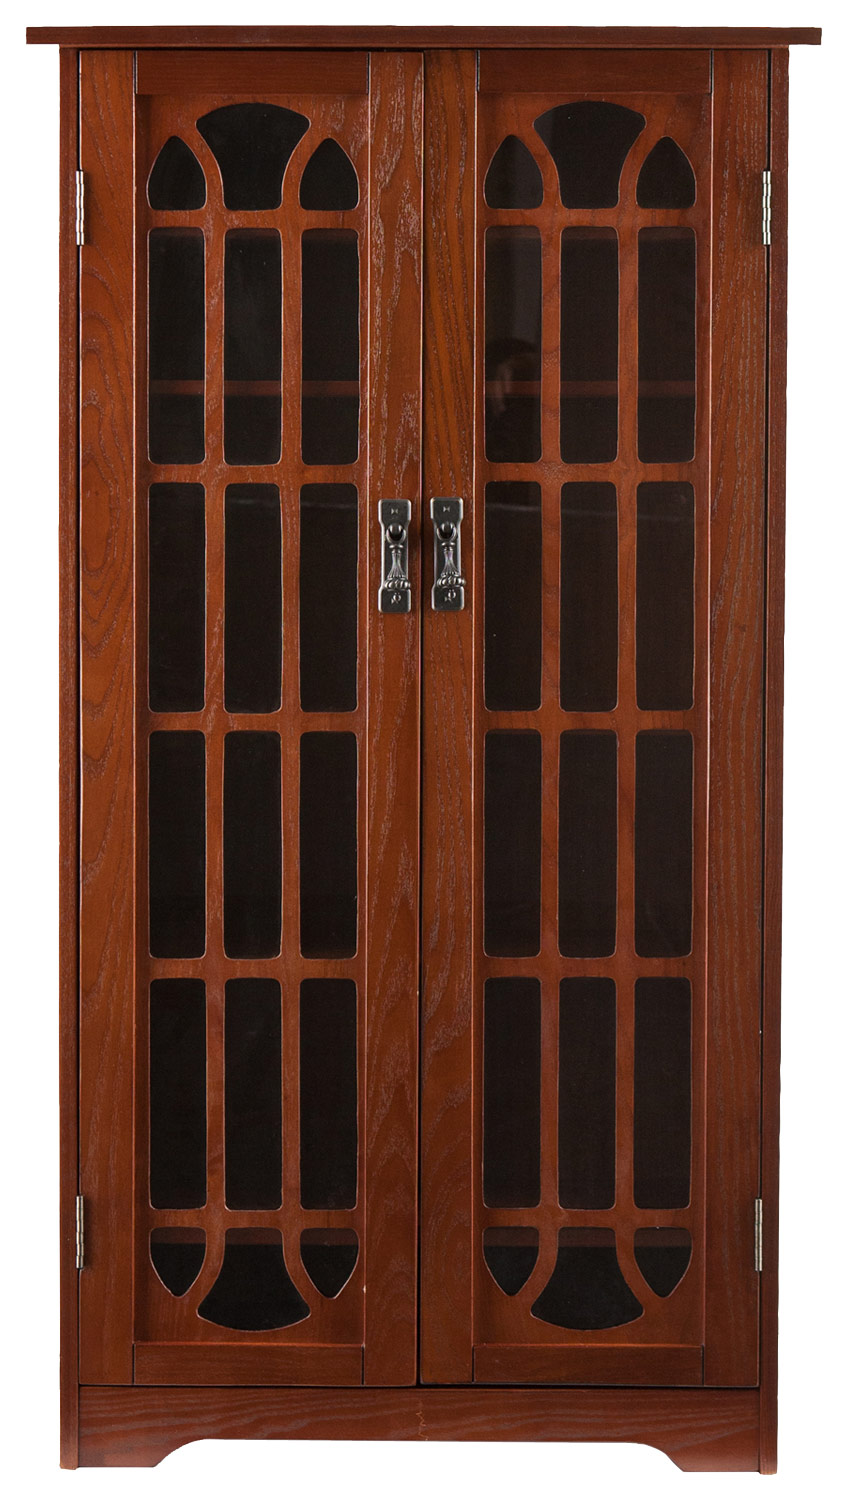 SEI Furniture - Media Cabinet - Medium Wood